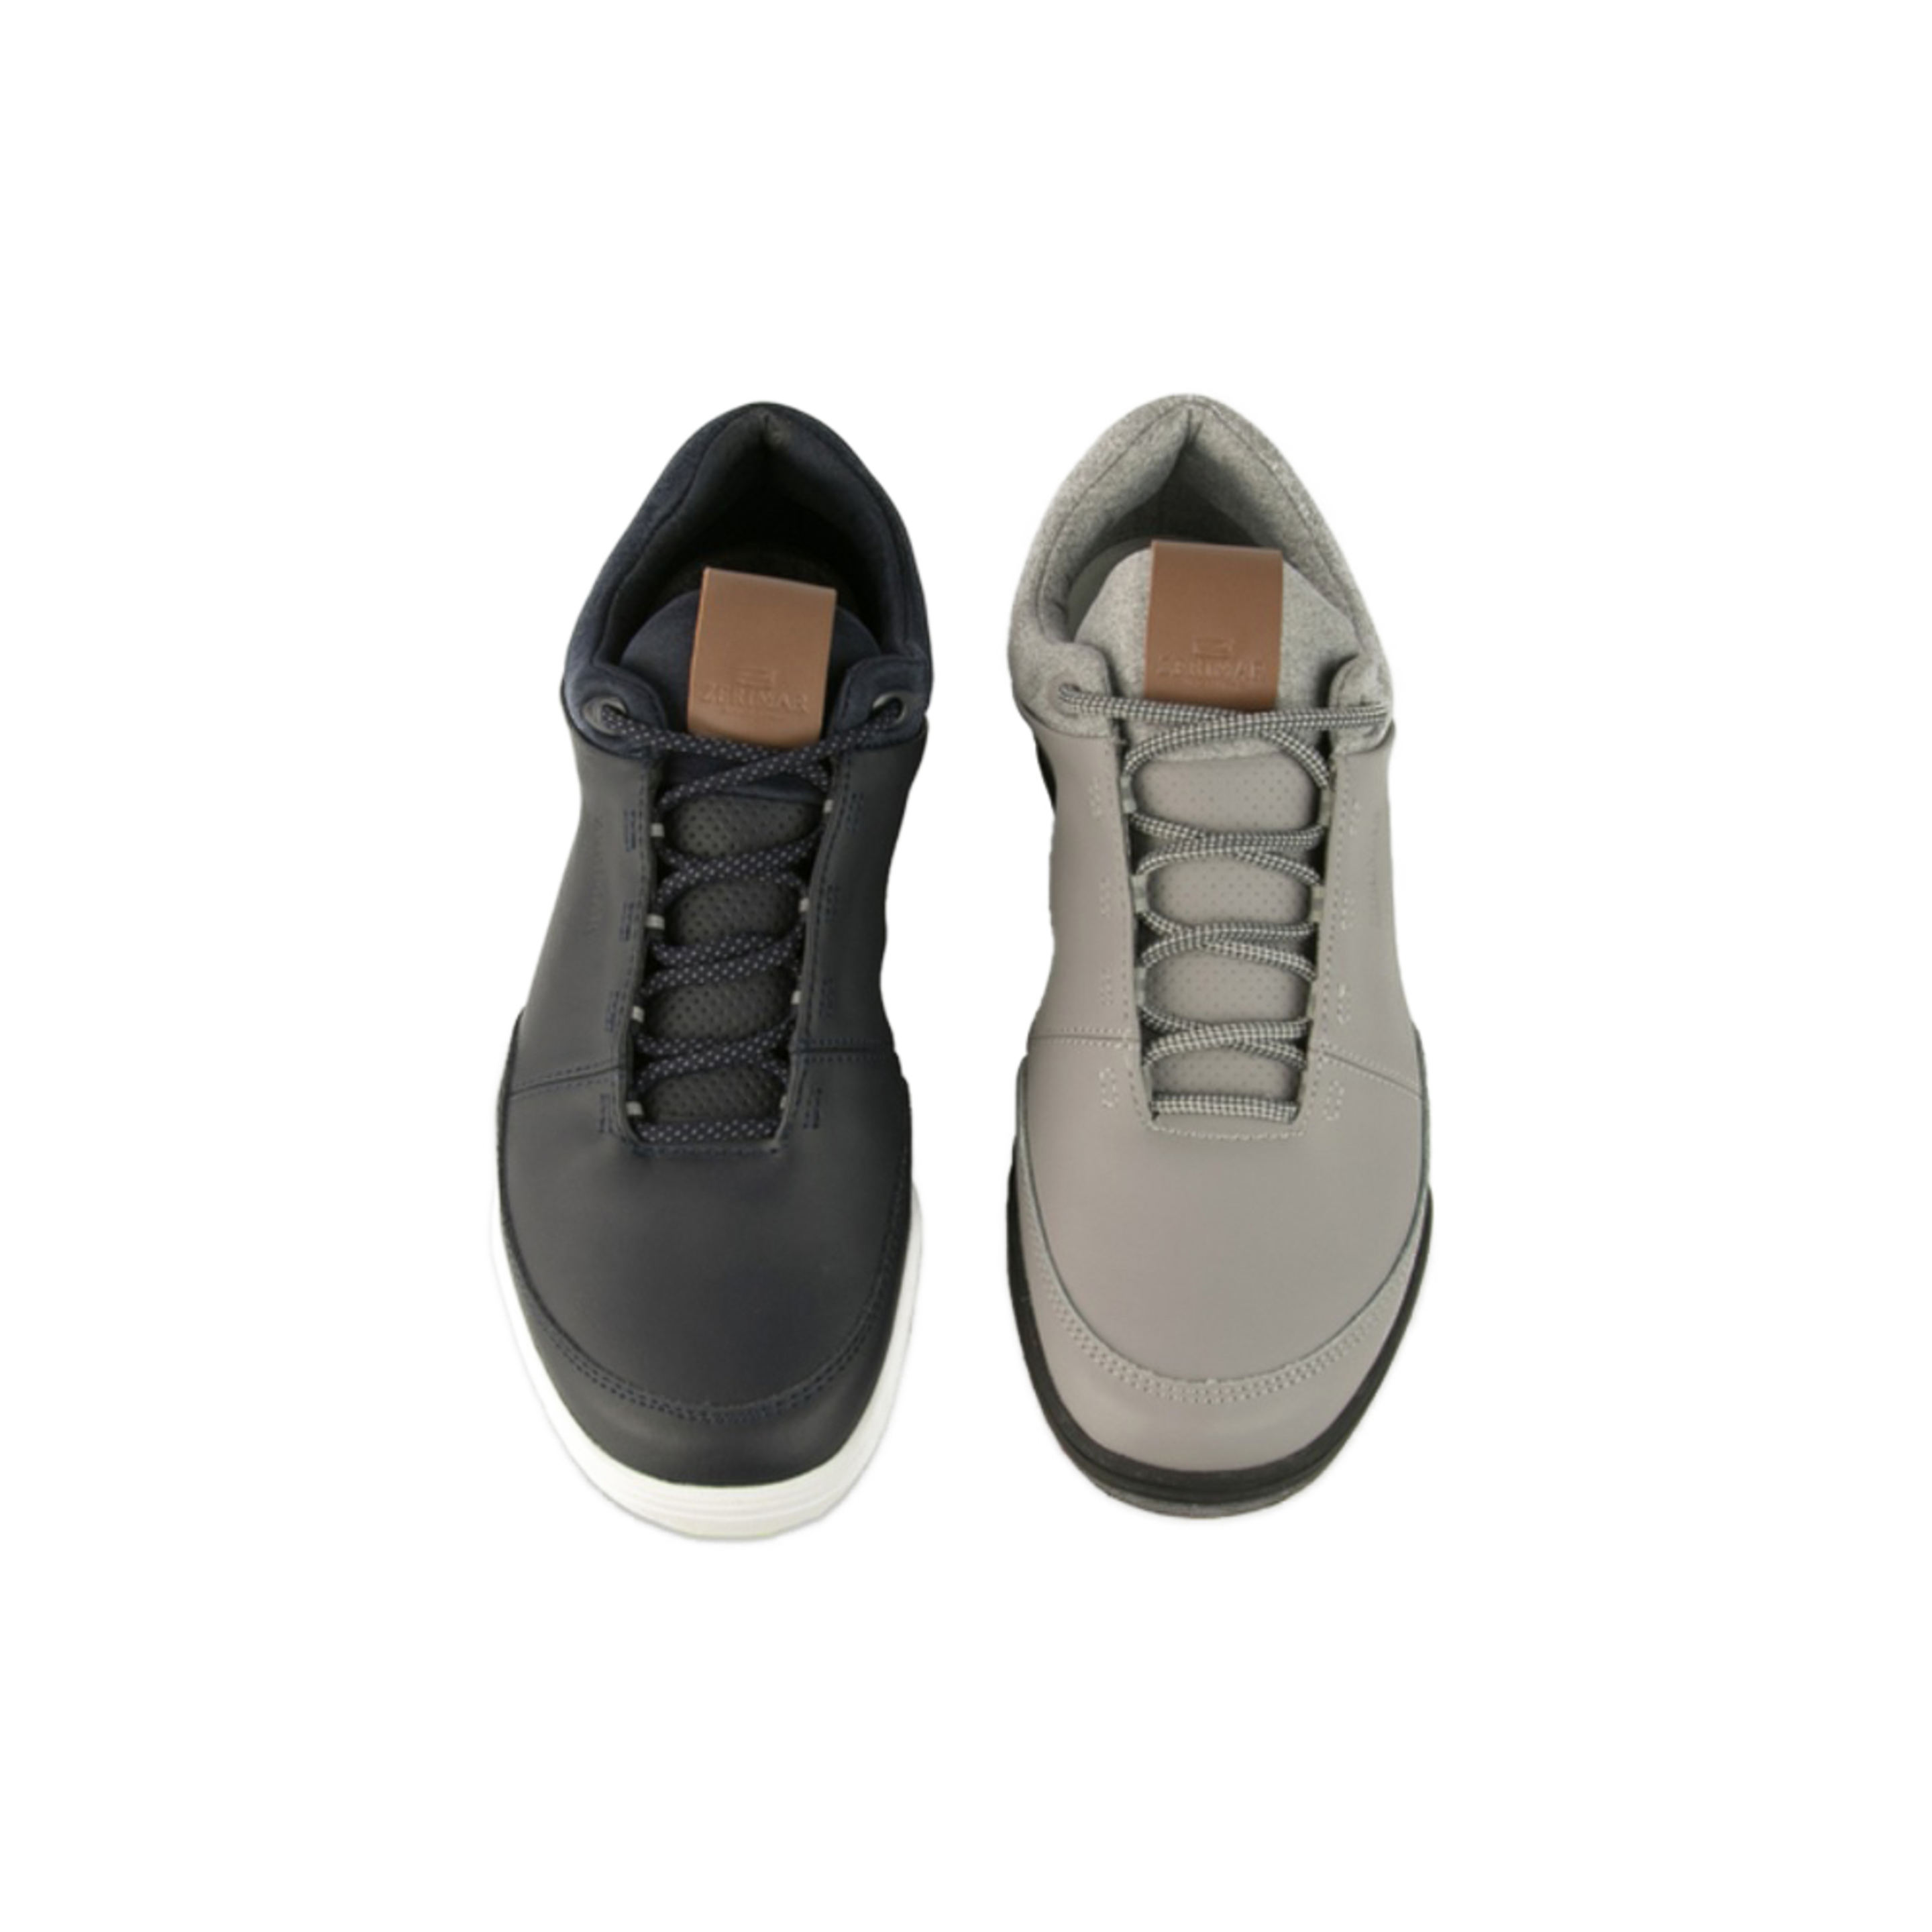 Zapatos De Golf Zerimar Lisos - Azul Marino - Zapatos Golf Hombre Zapatillas Piel  MKP